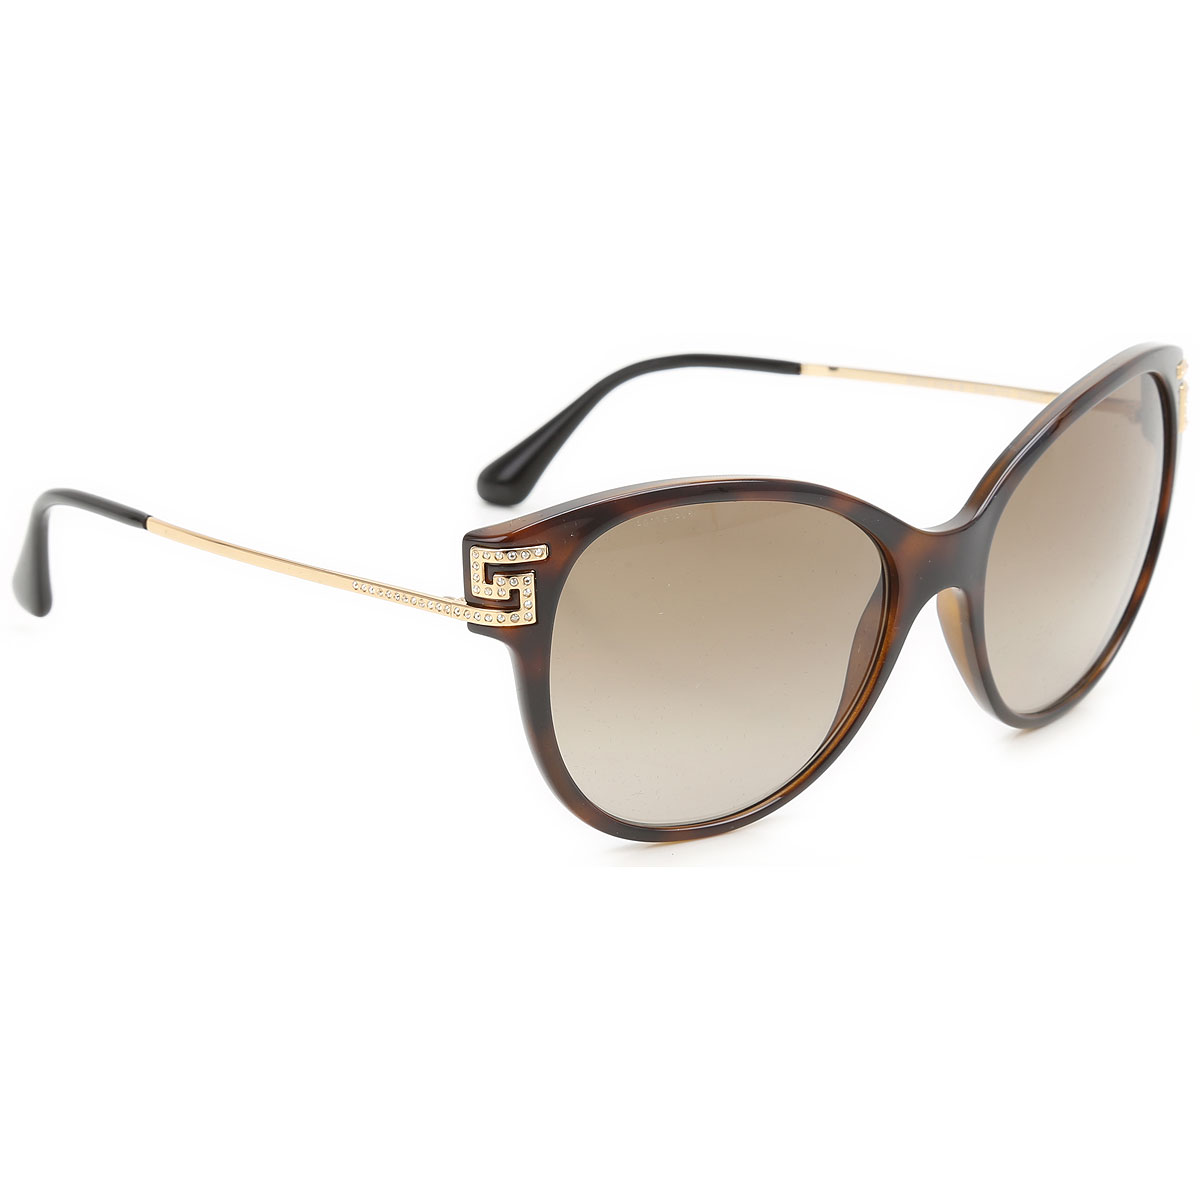 Sunglasses Gianni Versace, Style code: ve4316b-514813-N77